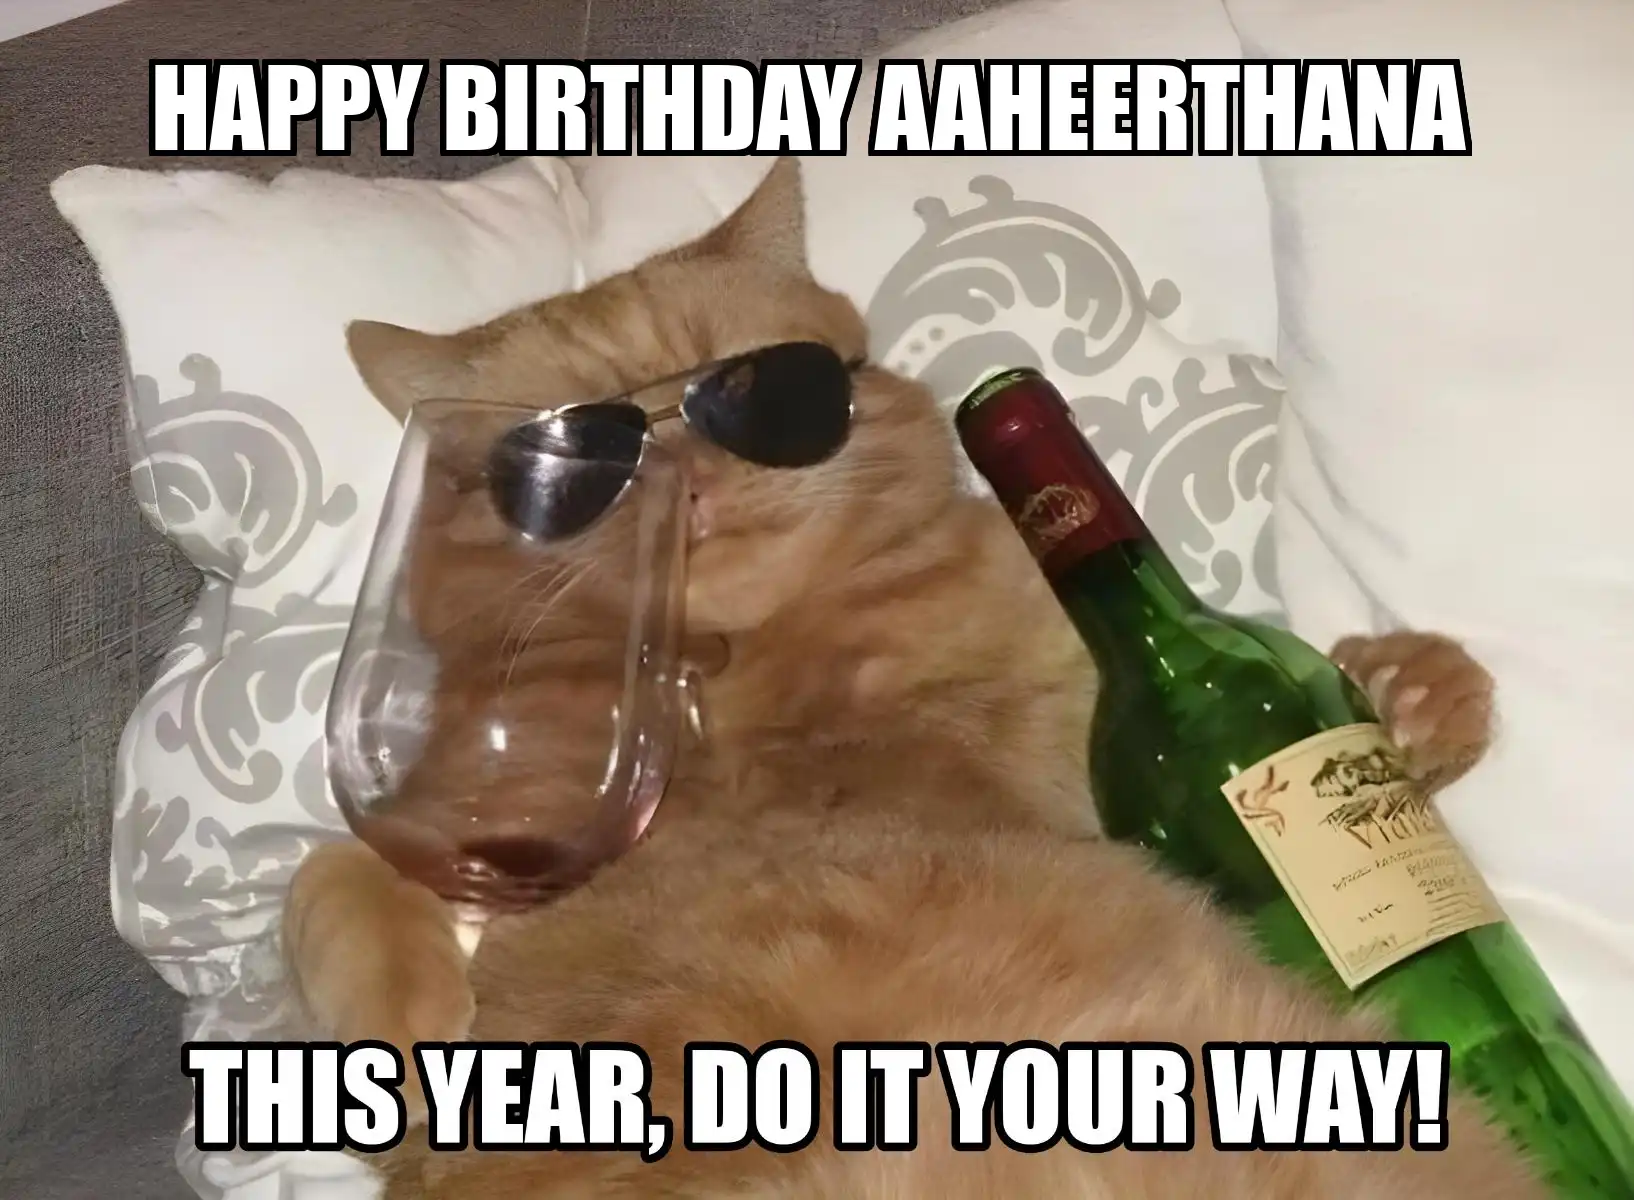 Happy Birthday Aaheerthana This Year Do It Your Way Meme